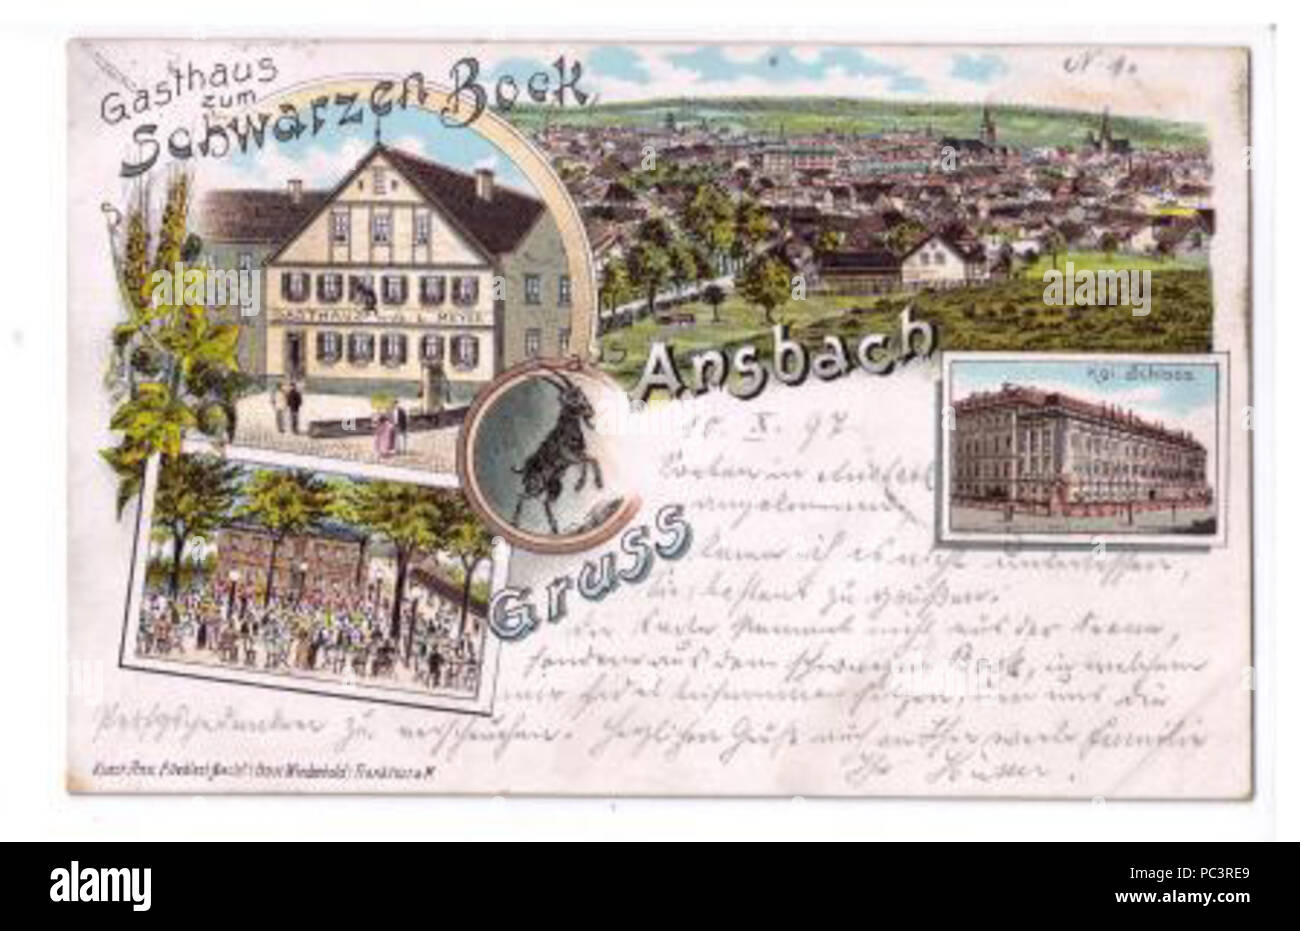 499 Postkarte Bock alte Fassade Stock Photo